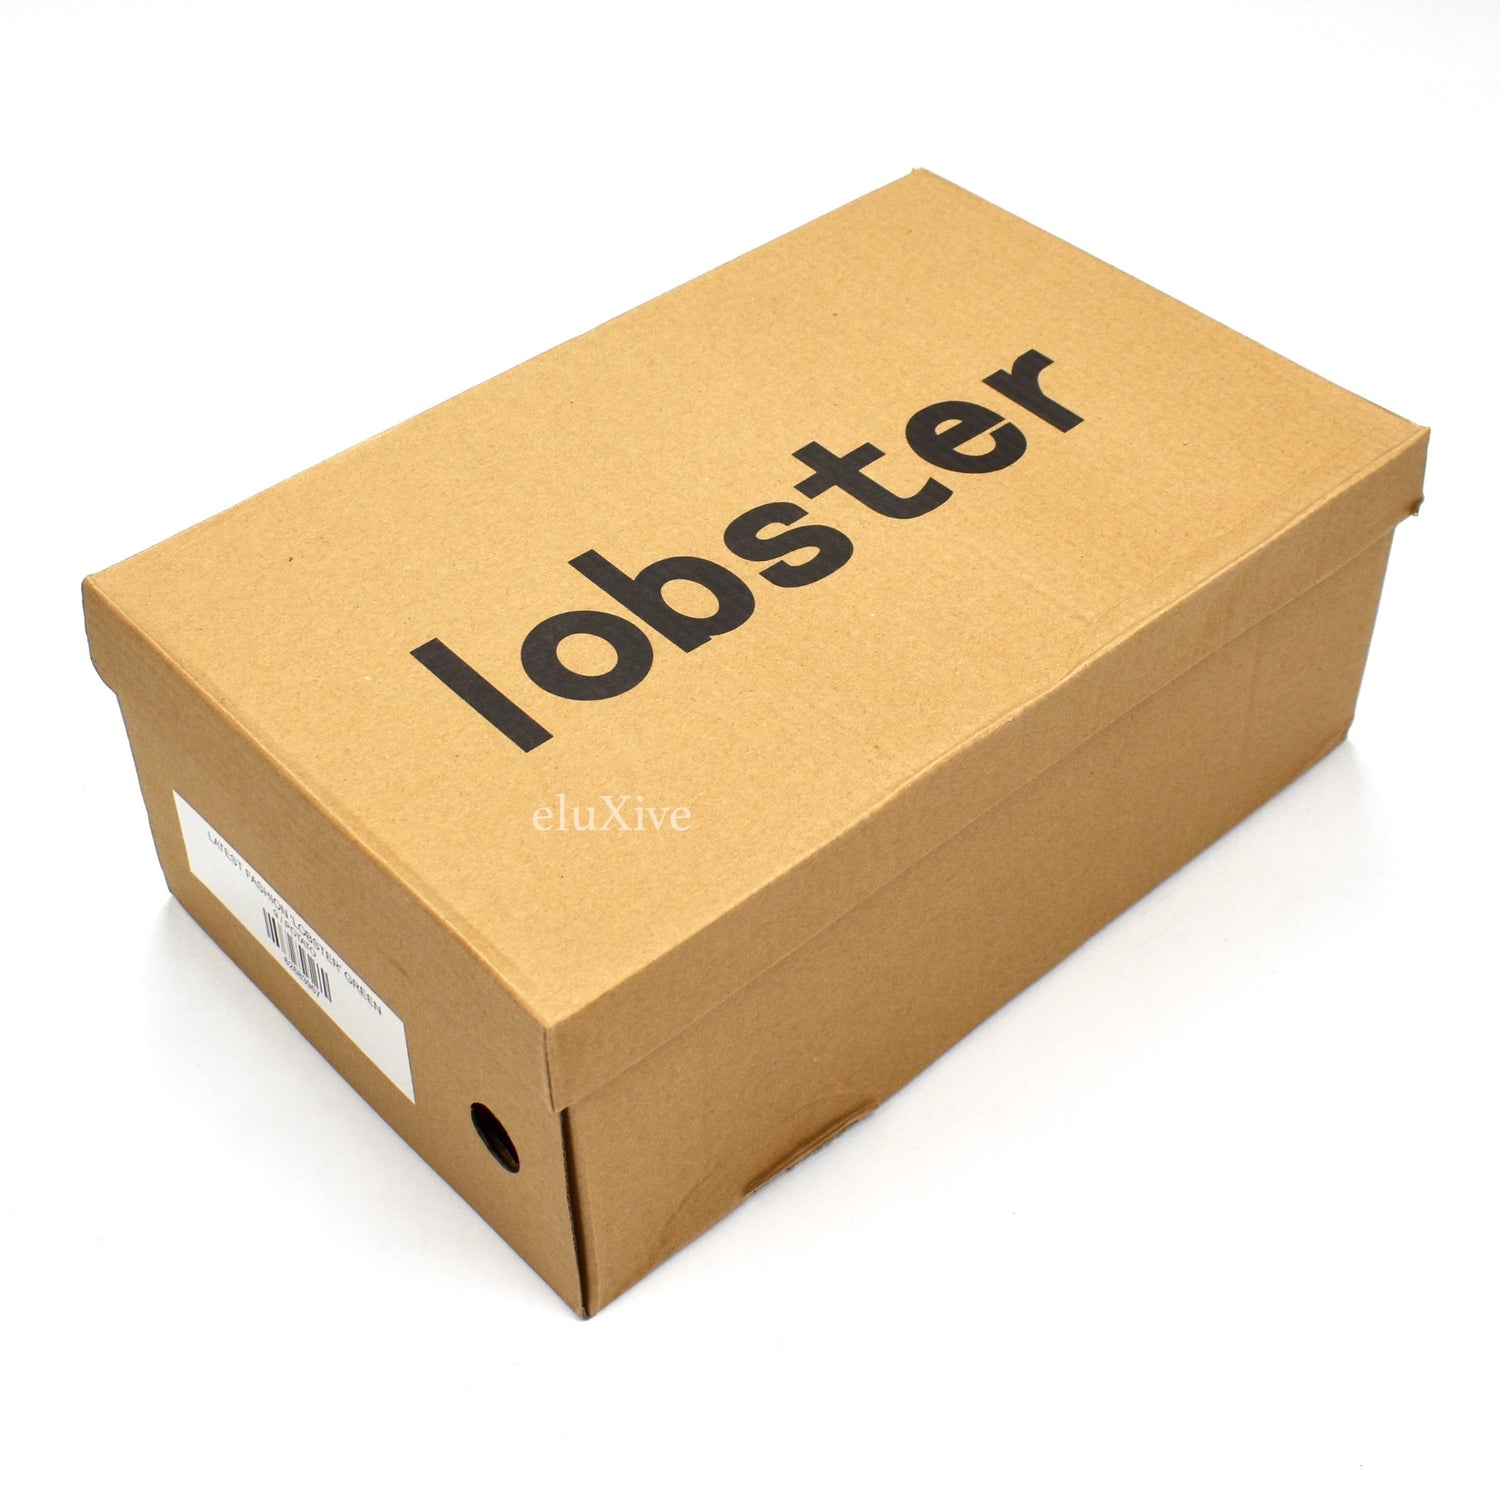 Imran Potato Imran Potato “Lobster” Foam Runner Yellow 12